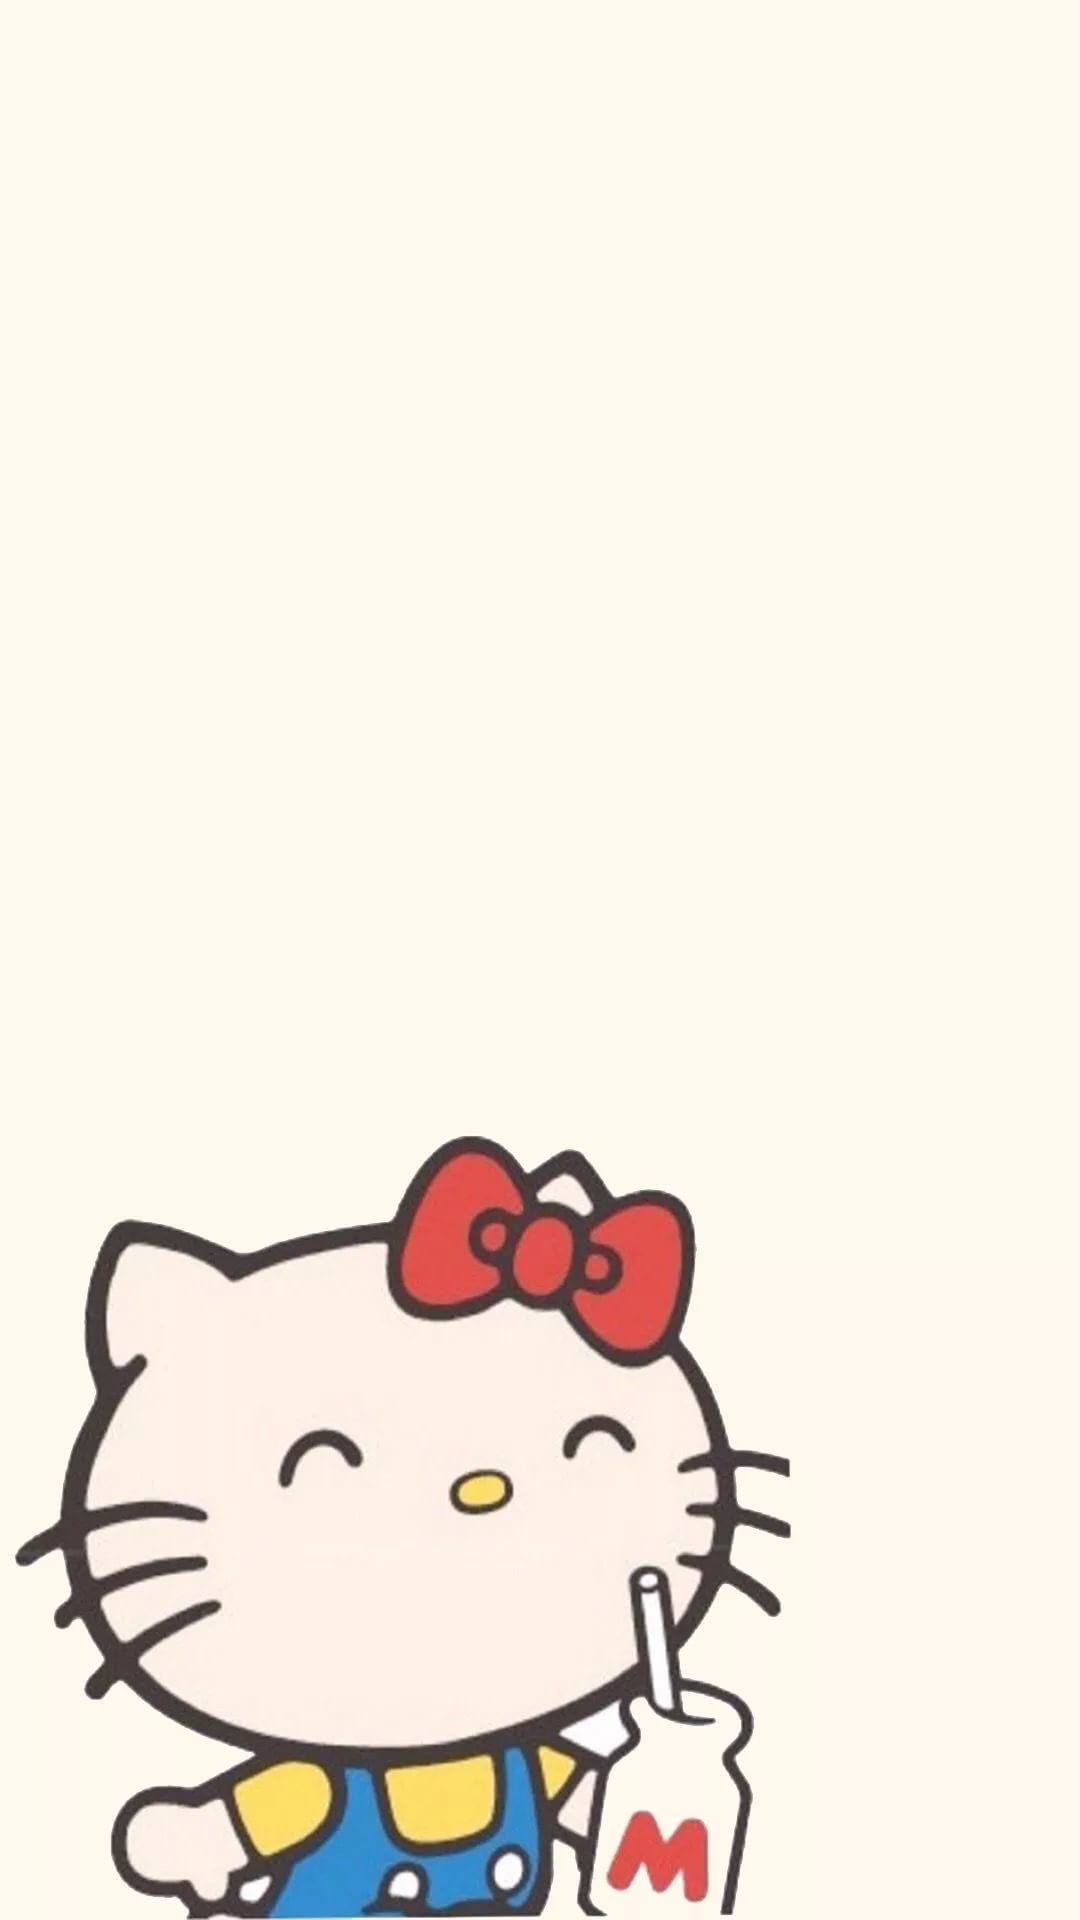 Hello Kitty iPhone 5 wallpaper